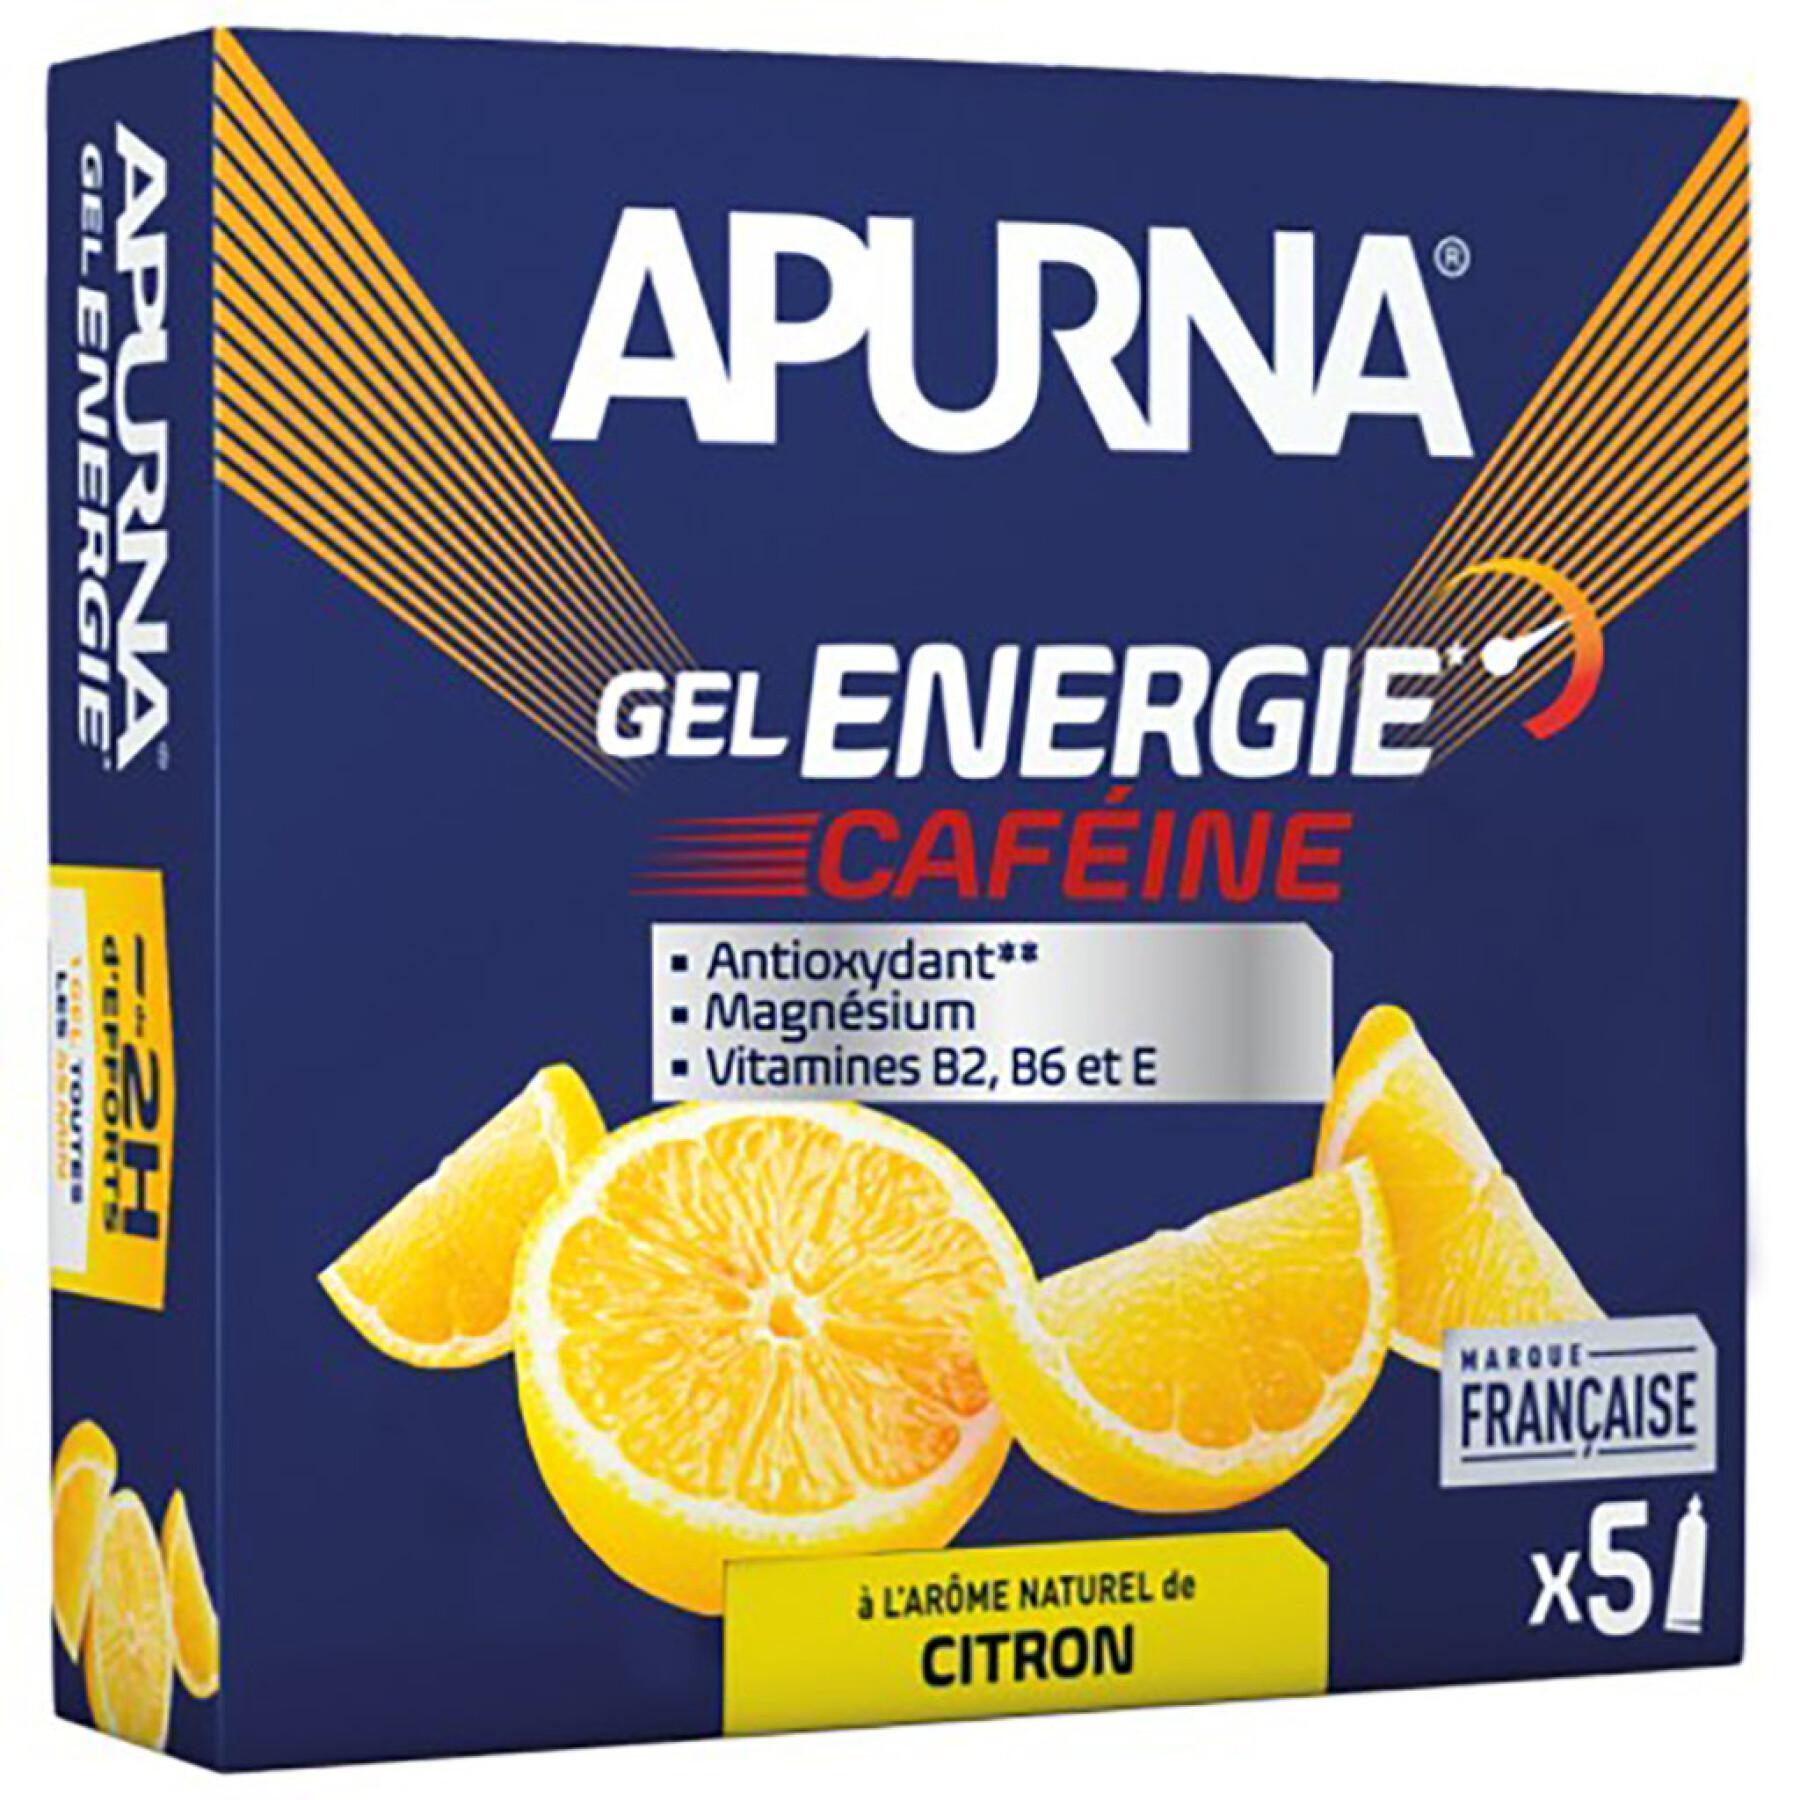 Lot of 5 energy gels lemon caffeine difficult passage Apurna